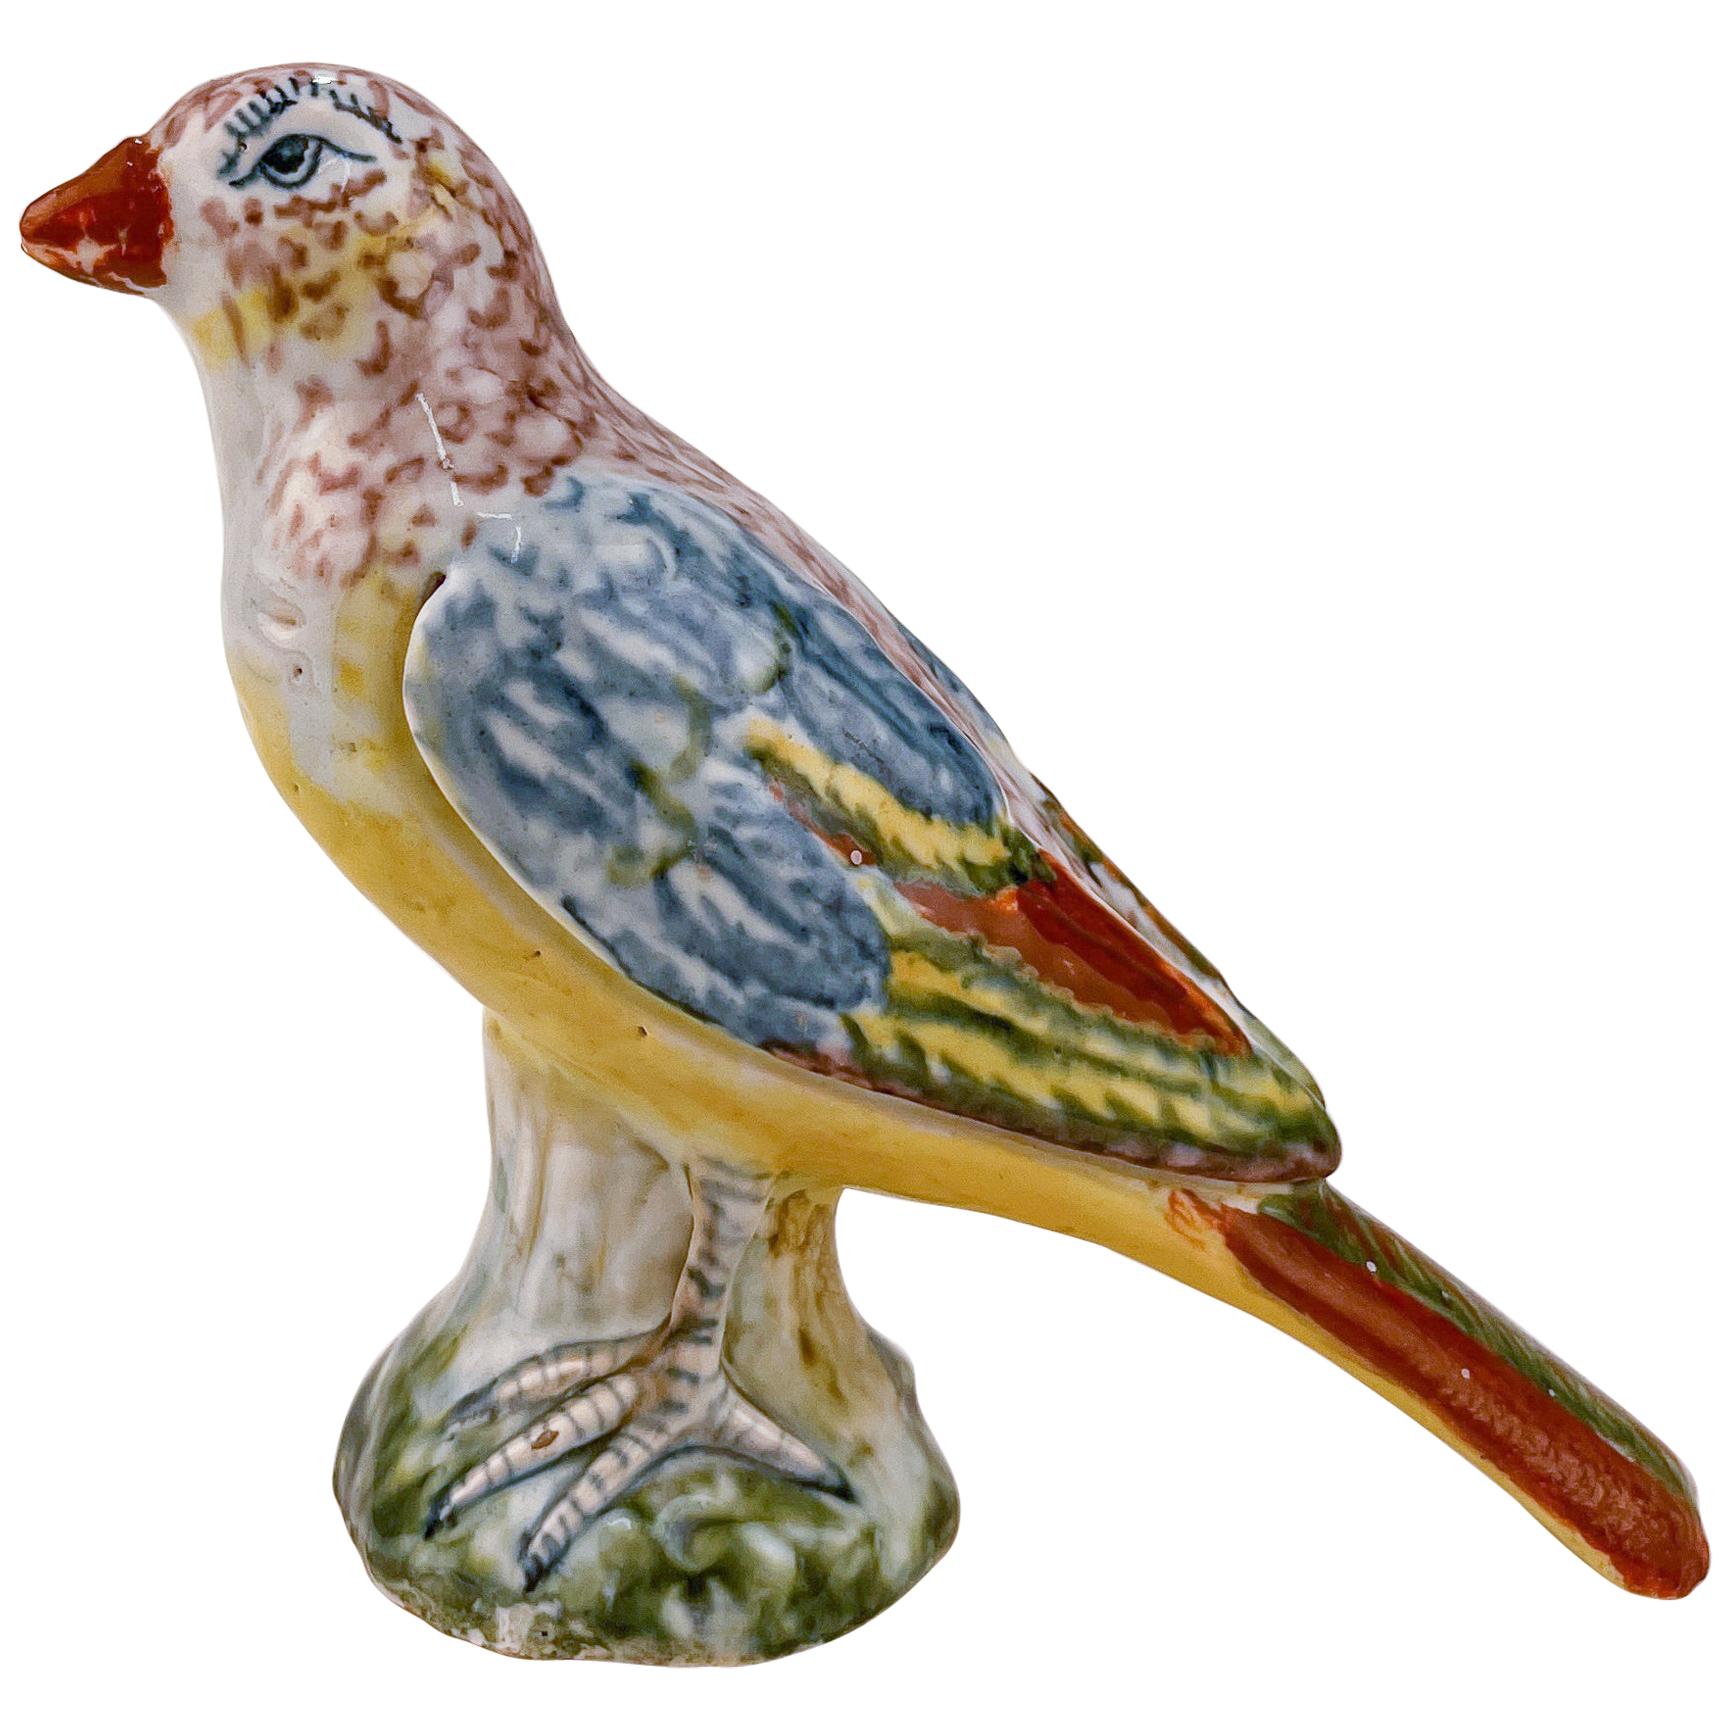 Antique Polychrome A Pennis Attributed Dutch Delft Pottery Bird Figurine / Model